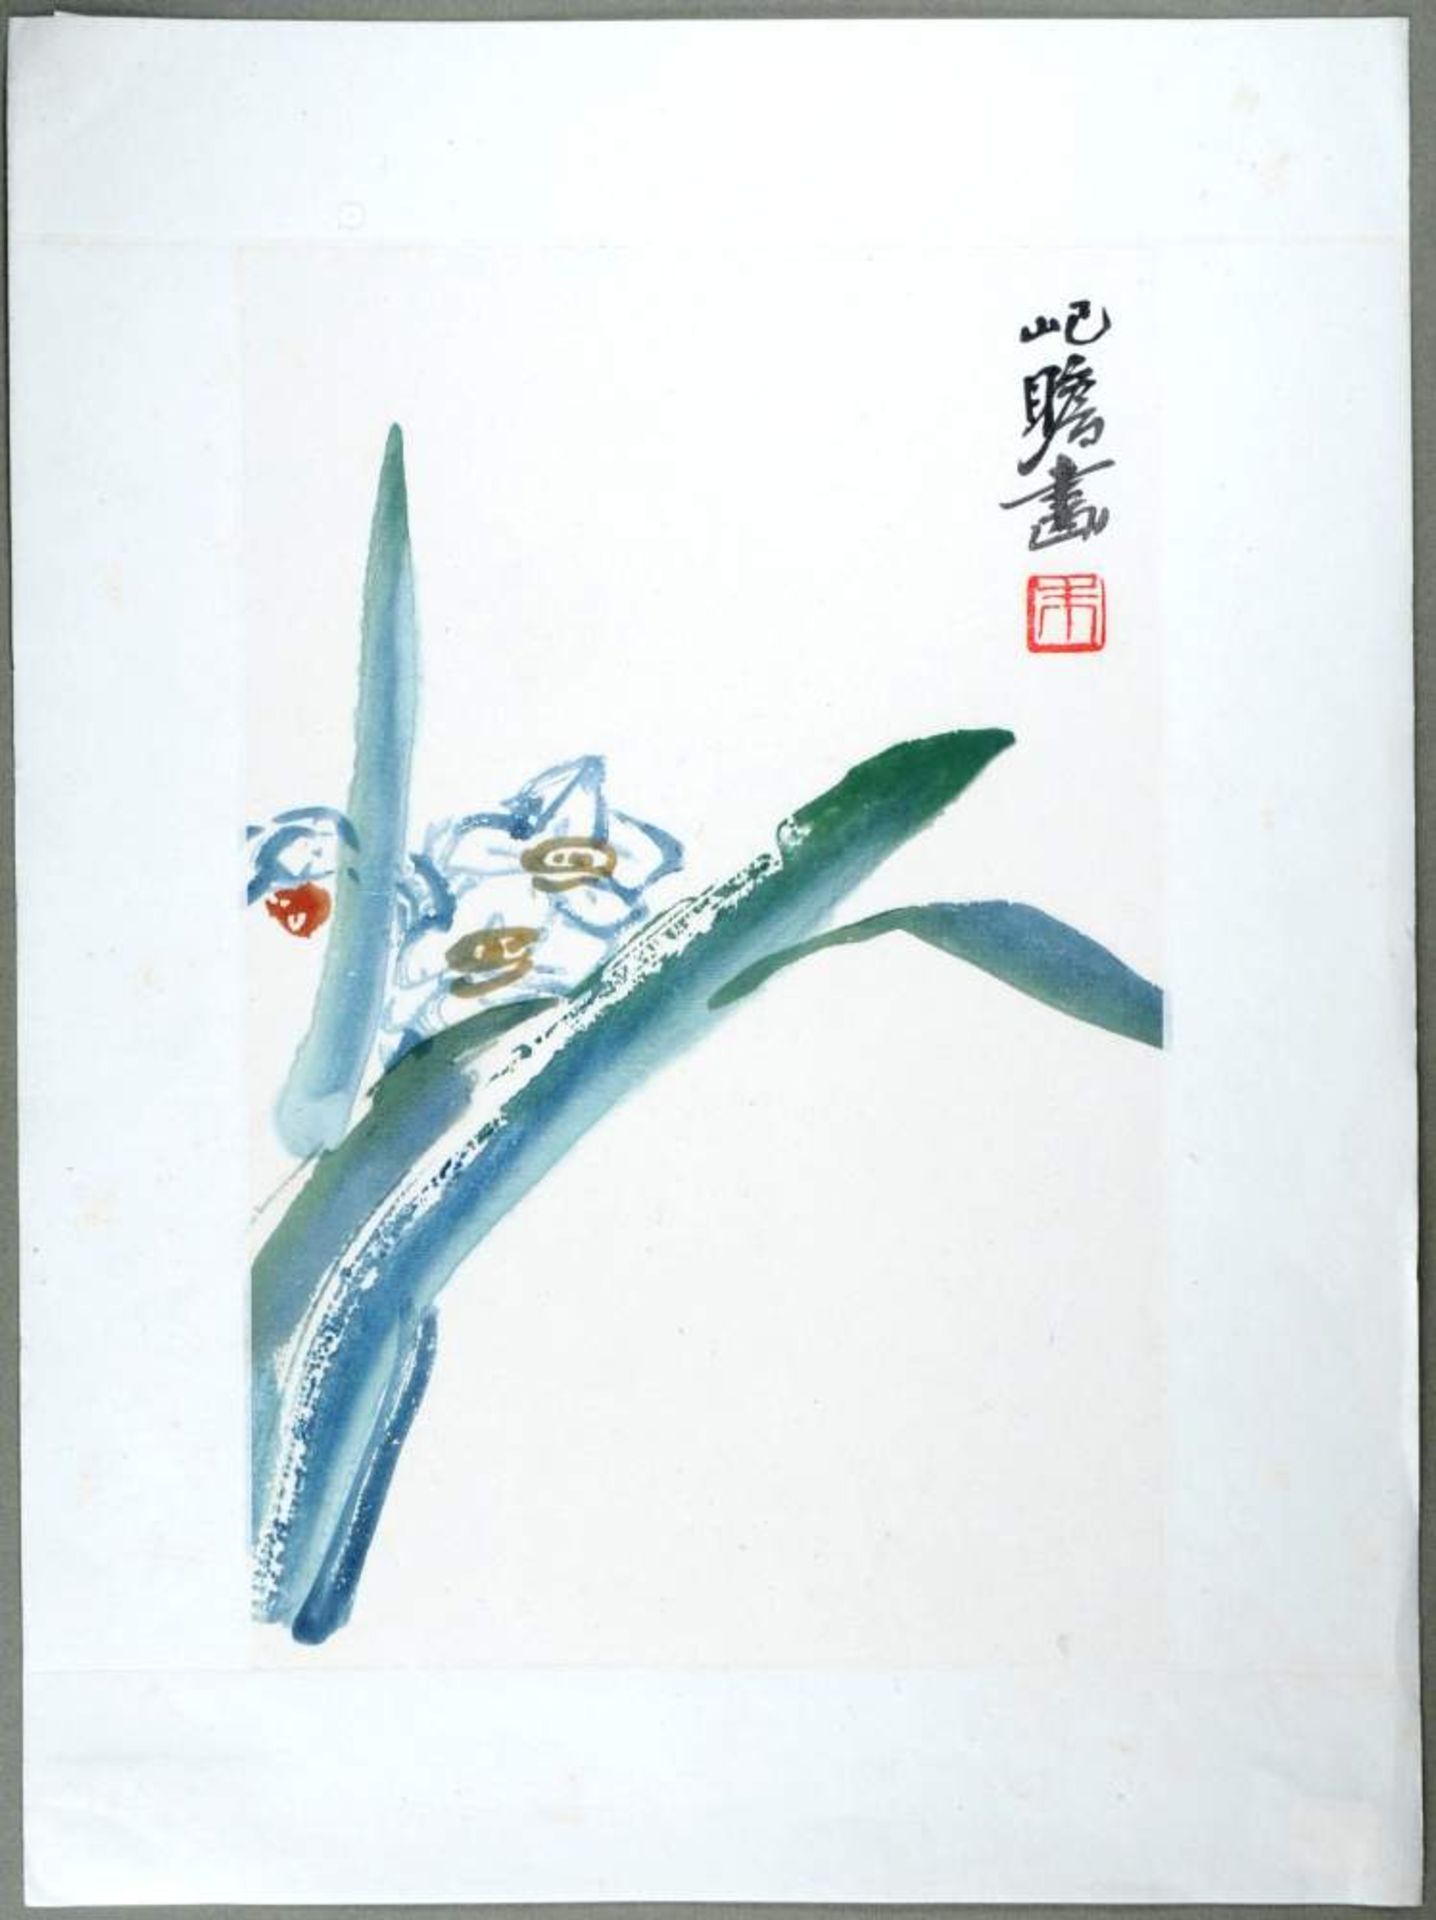 ZHU JIZHANG (20. JH.)Aquarellfarben-Holzschnitt. China, 20th cent.Darstellung einer Narzisse mit der